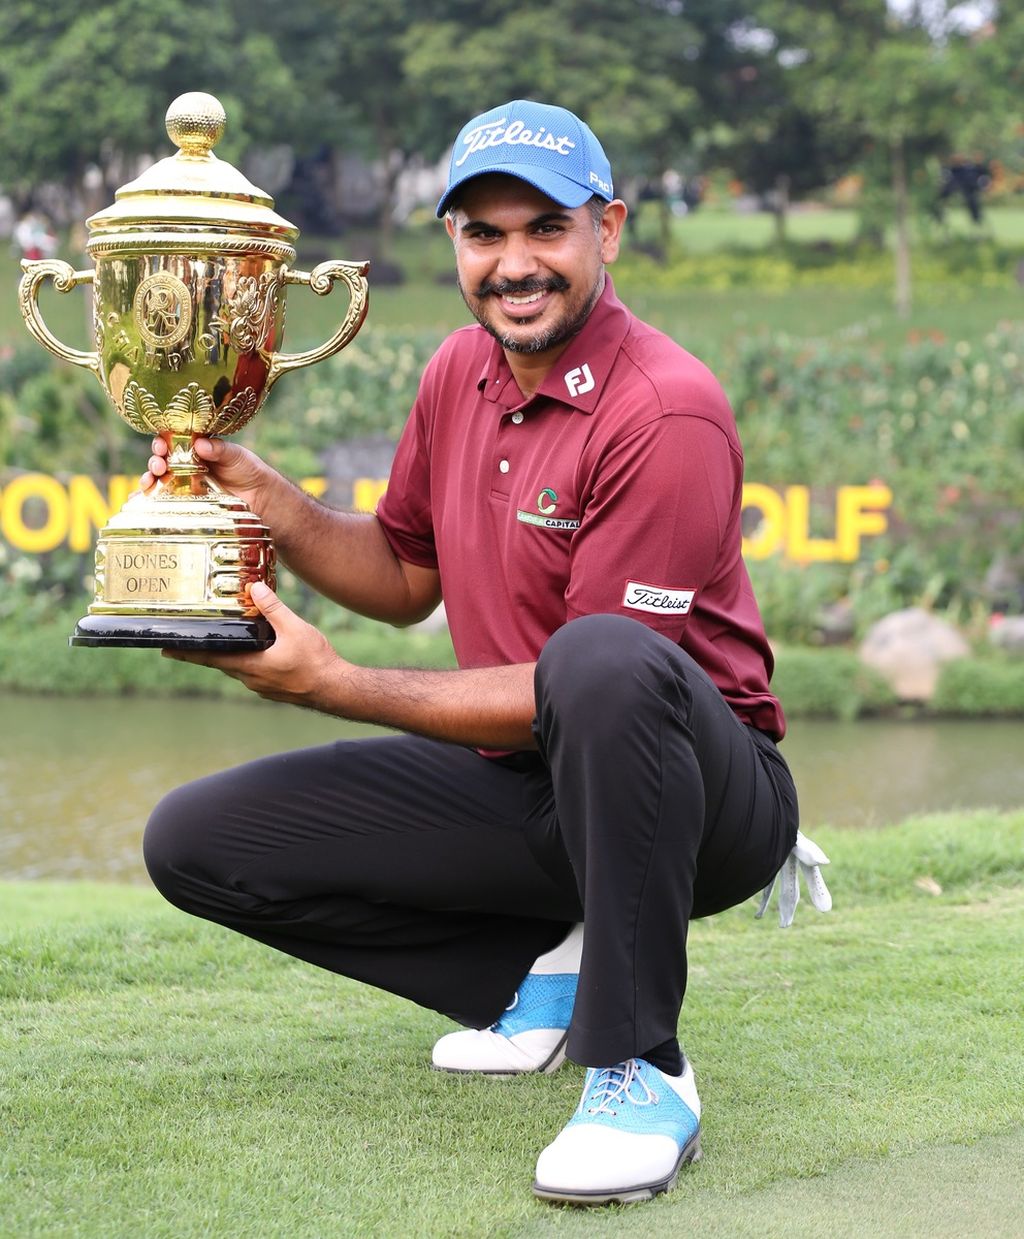 Pegolf India Gaganjeet Bhullar memamerkan trofi juara Mandiri Indonesia Open pada Minggu (7/8/2022) di Lapangan Golf Pondok Indah, Jakarta. Sebelumnya, Bhullar pernah menjuarai Indonesia Open pada 2013 dan 2015.